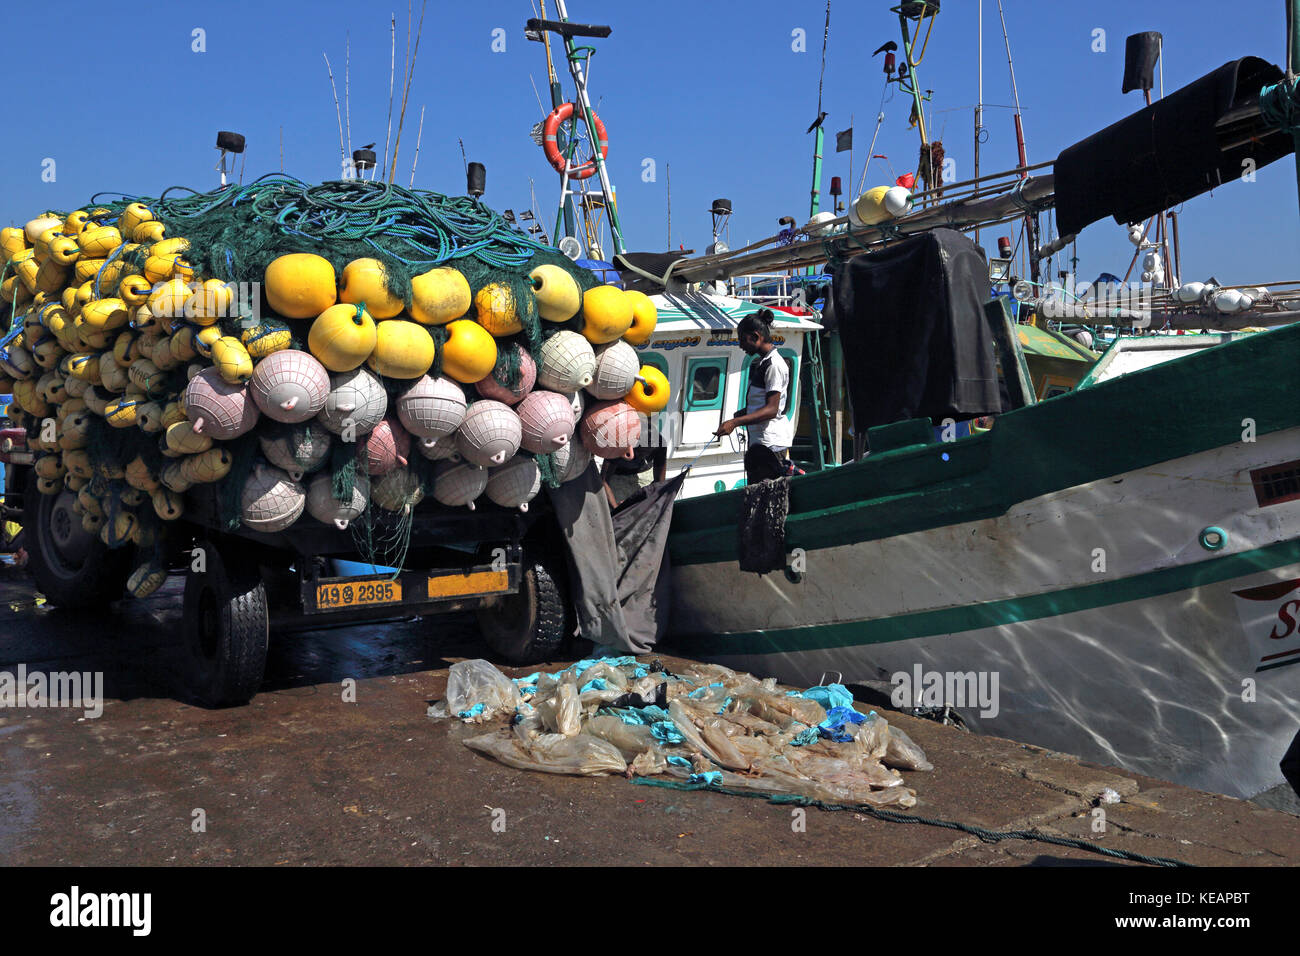 Province de Sri Lanka Mirissa Port de pêche les filets de pêche de hommes à partir de la remorque d'un tracteur Banque D'Images